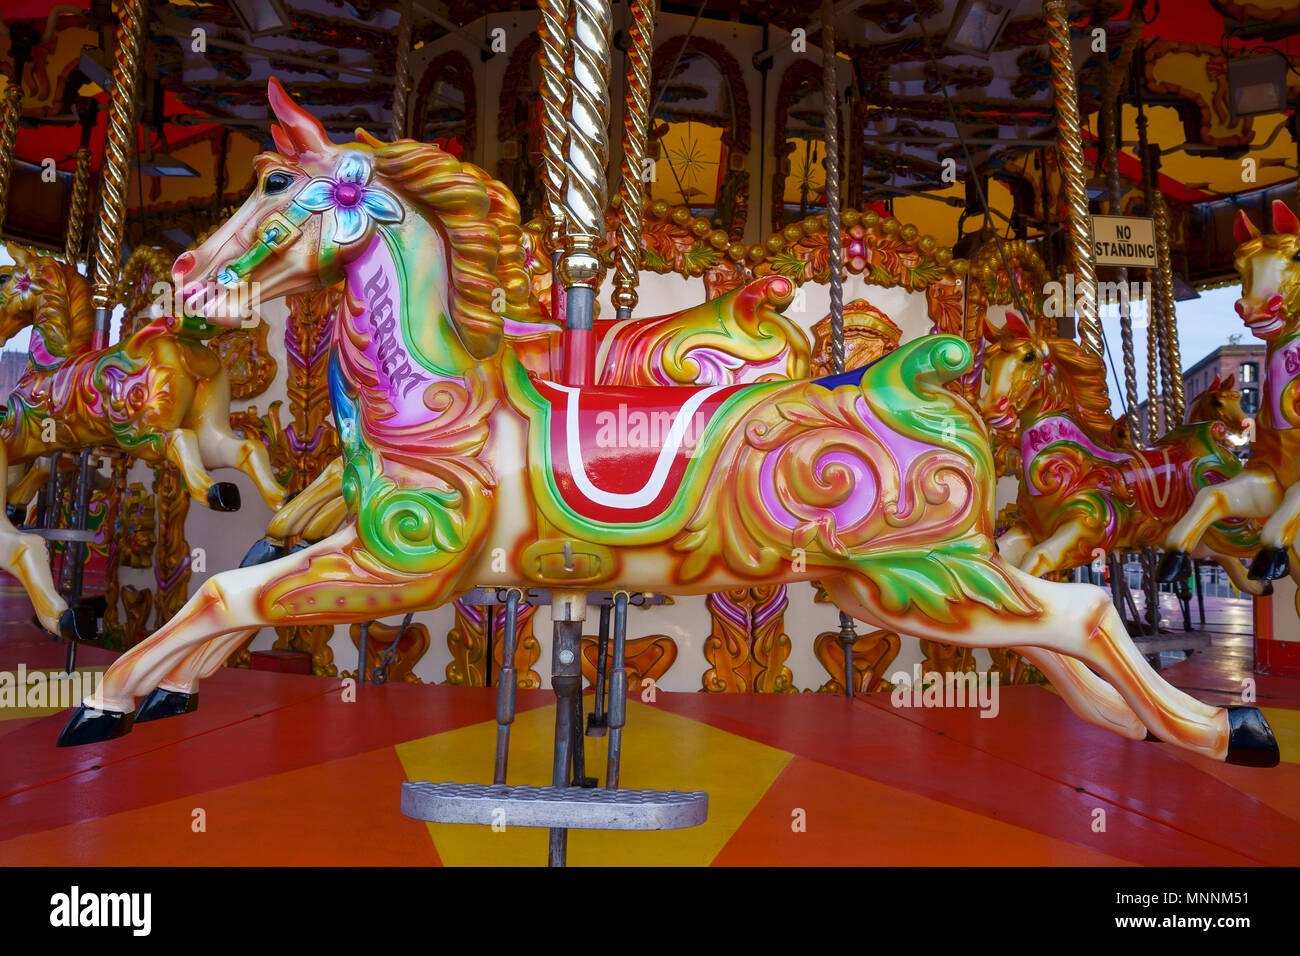 Horses on a fairground carousel ride Stock Photo